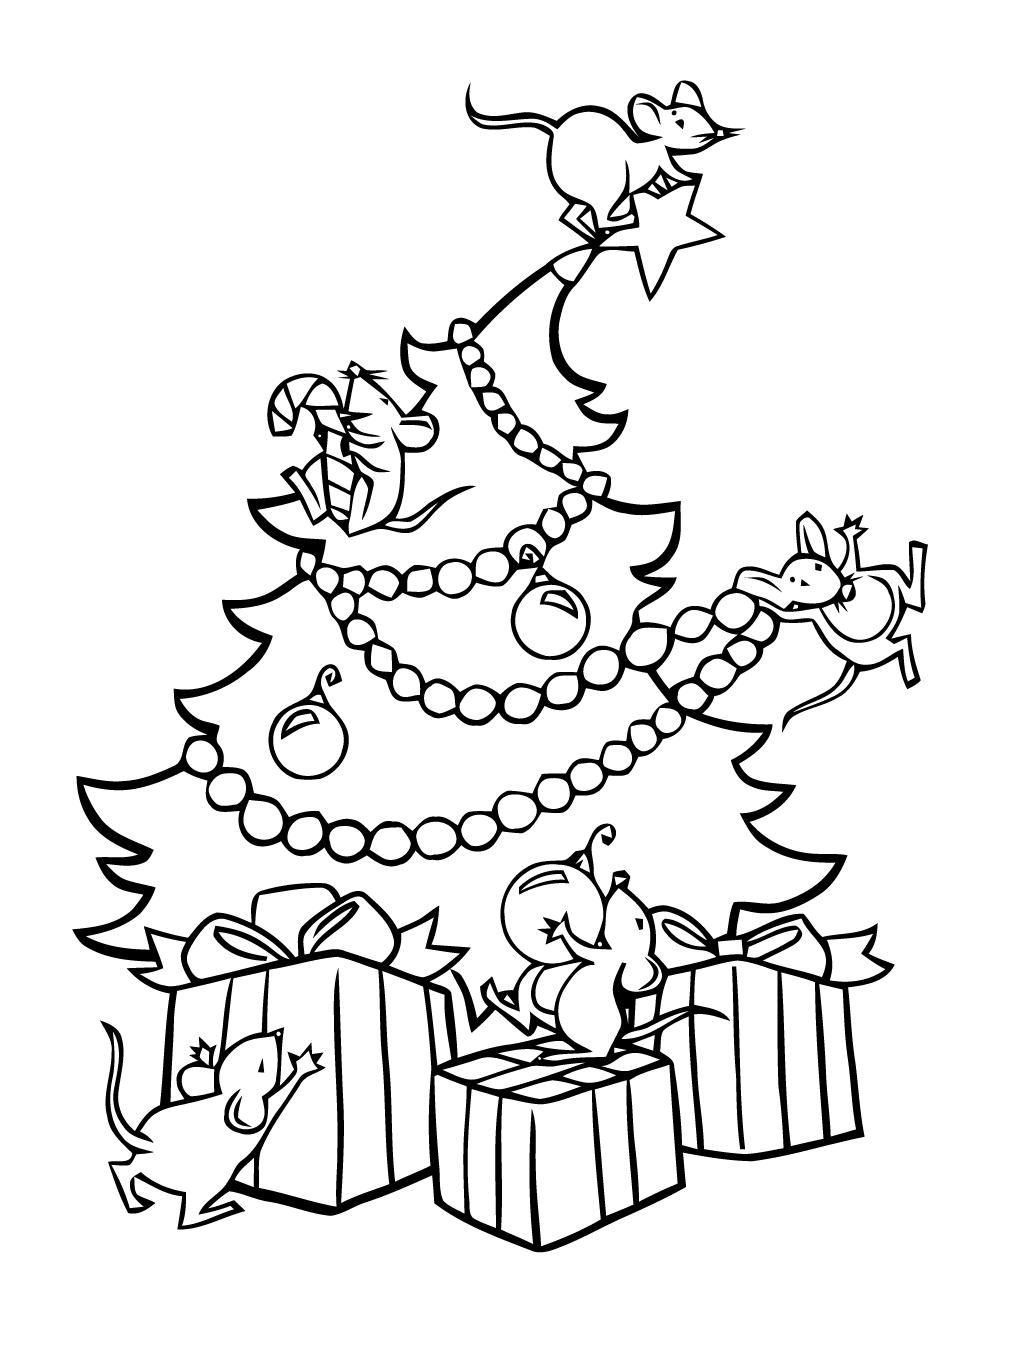 Página divertida para colorir sobre a árvore de Natal para imprimir e pintar